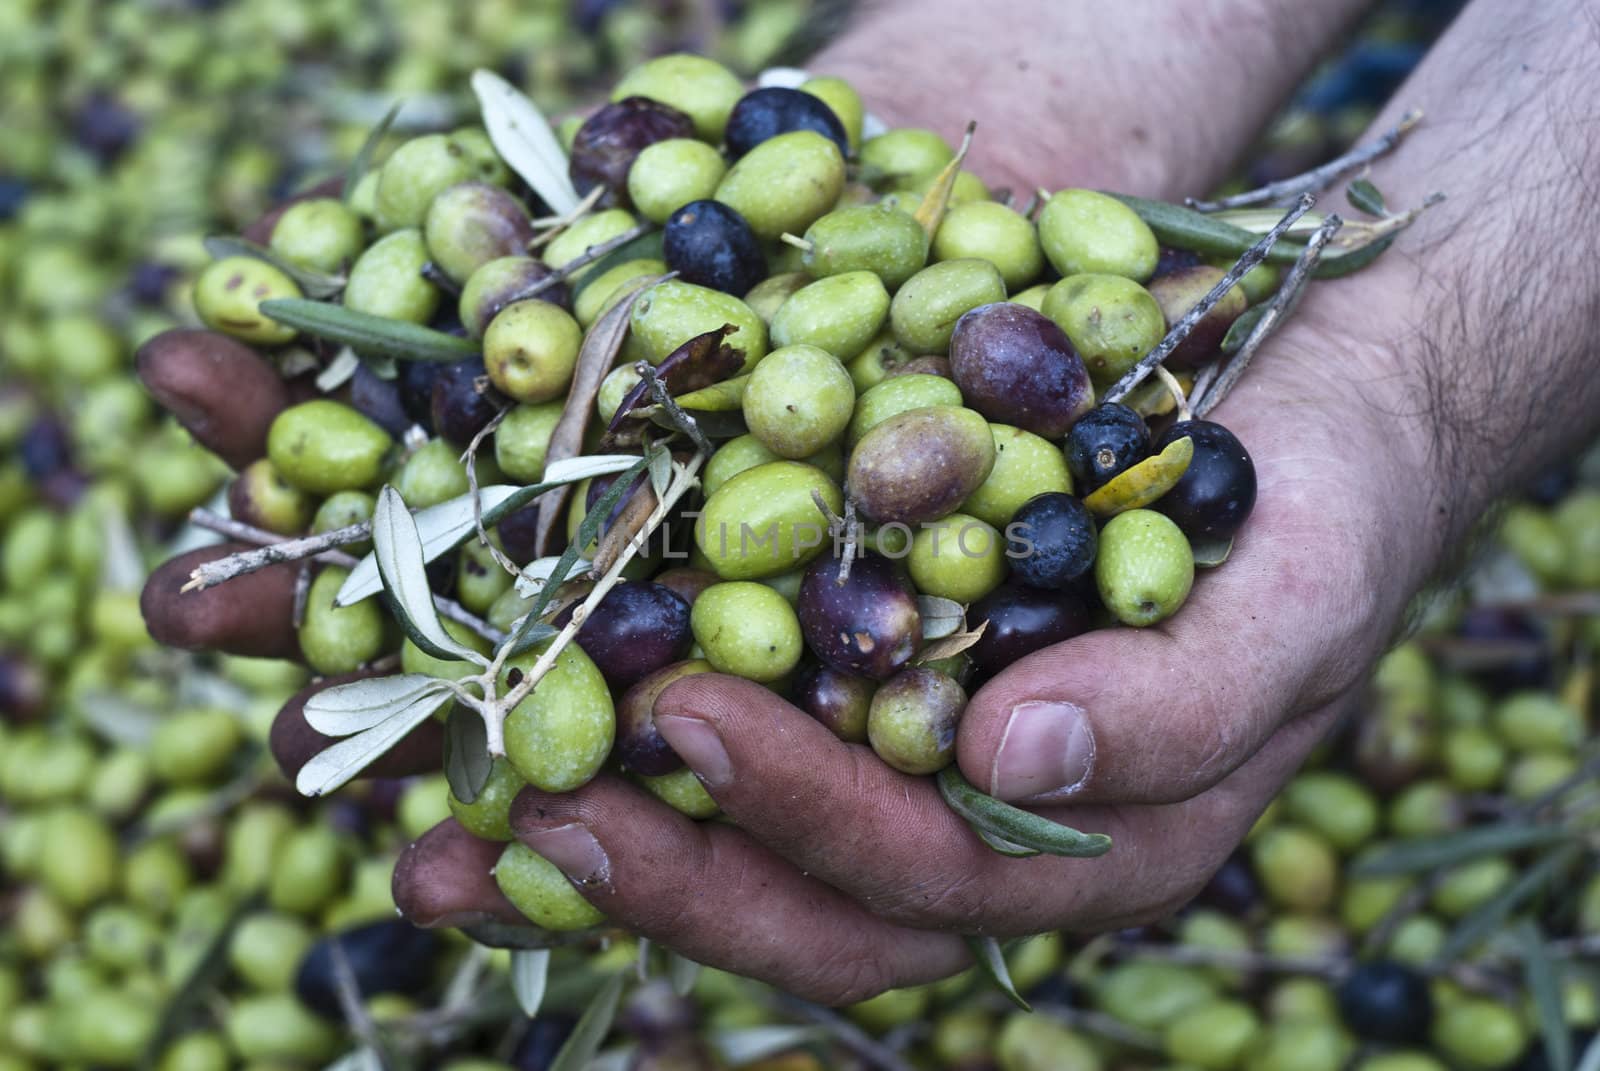 Olives in hands by gandolfocannatella